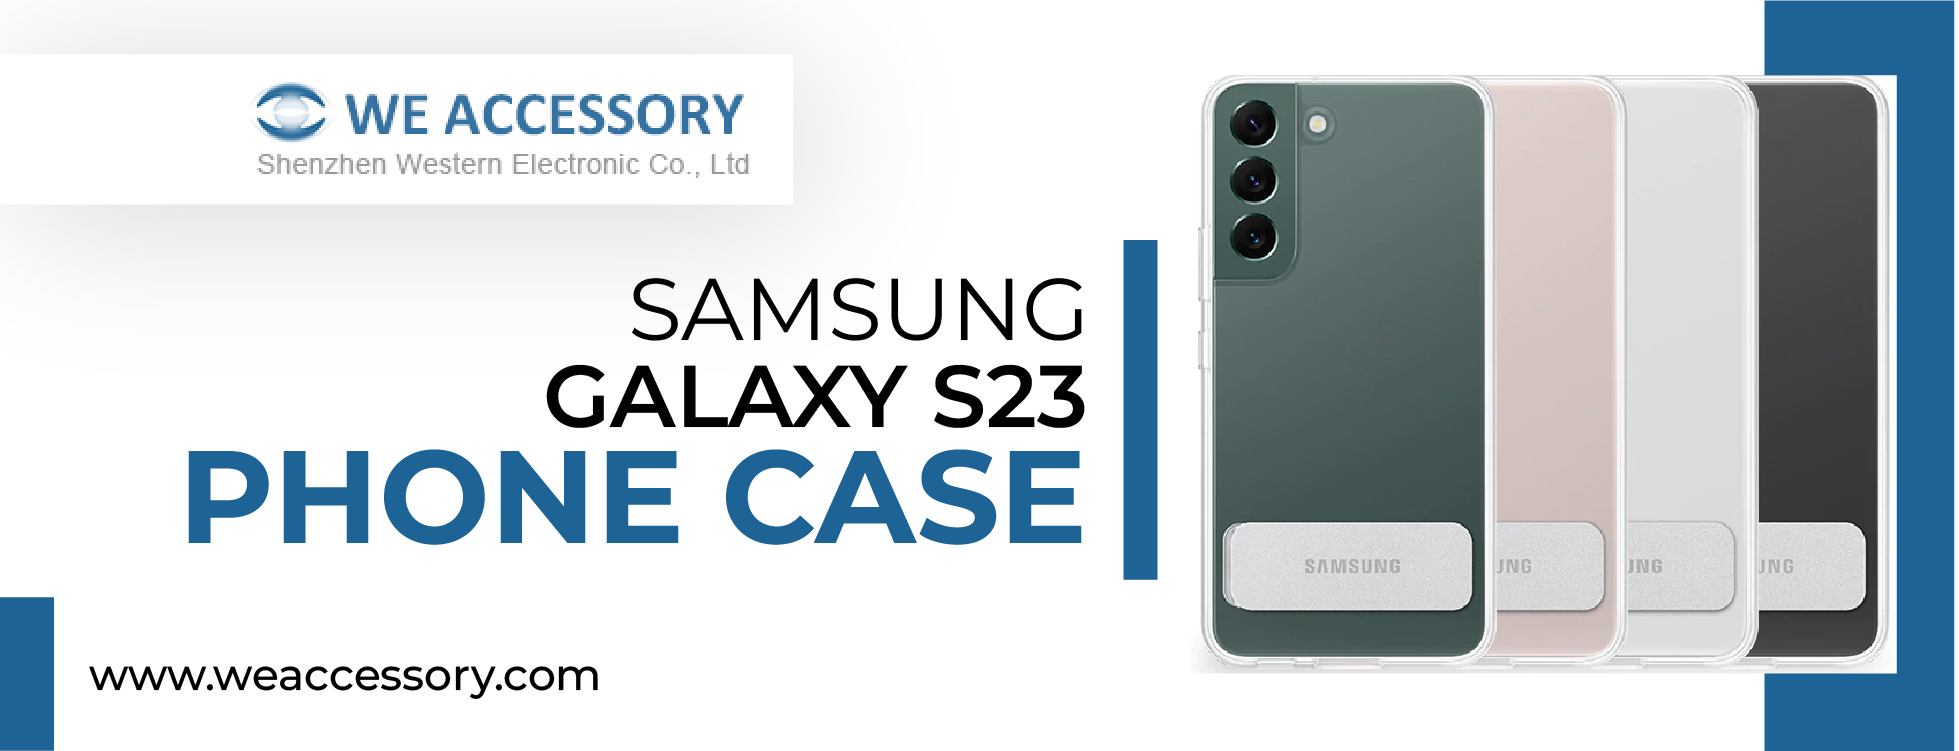  Samsung galaxy s23 phone case